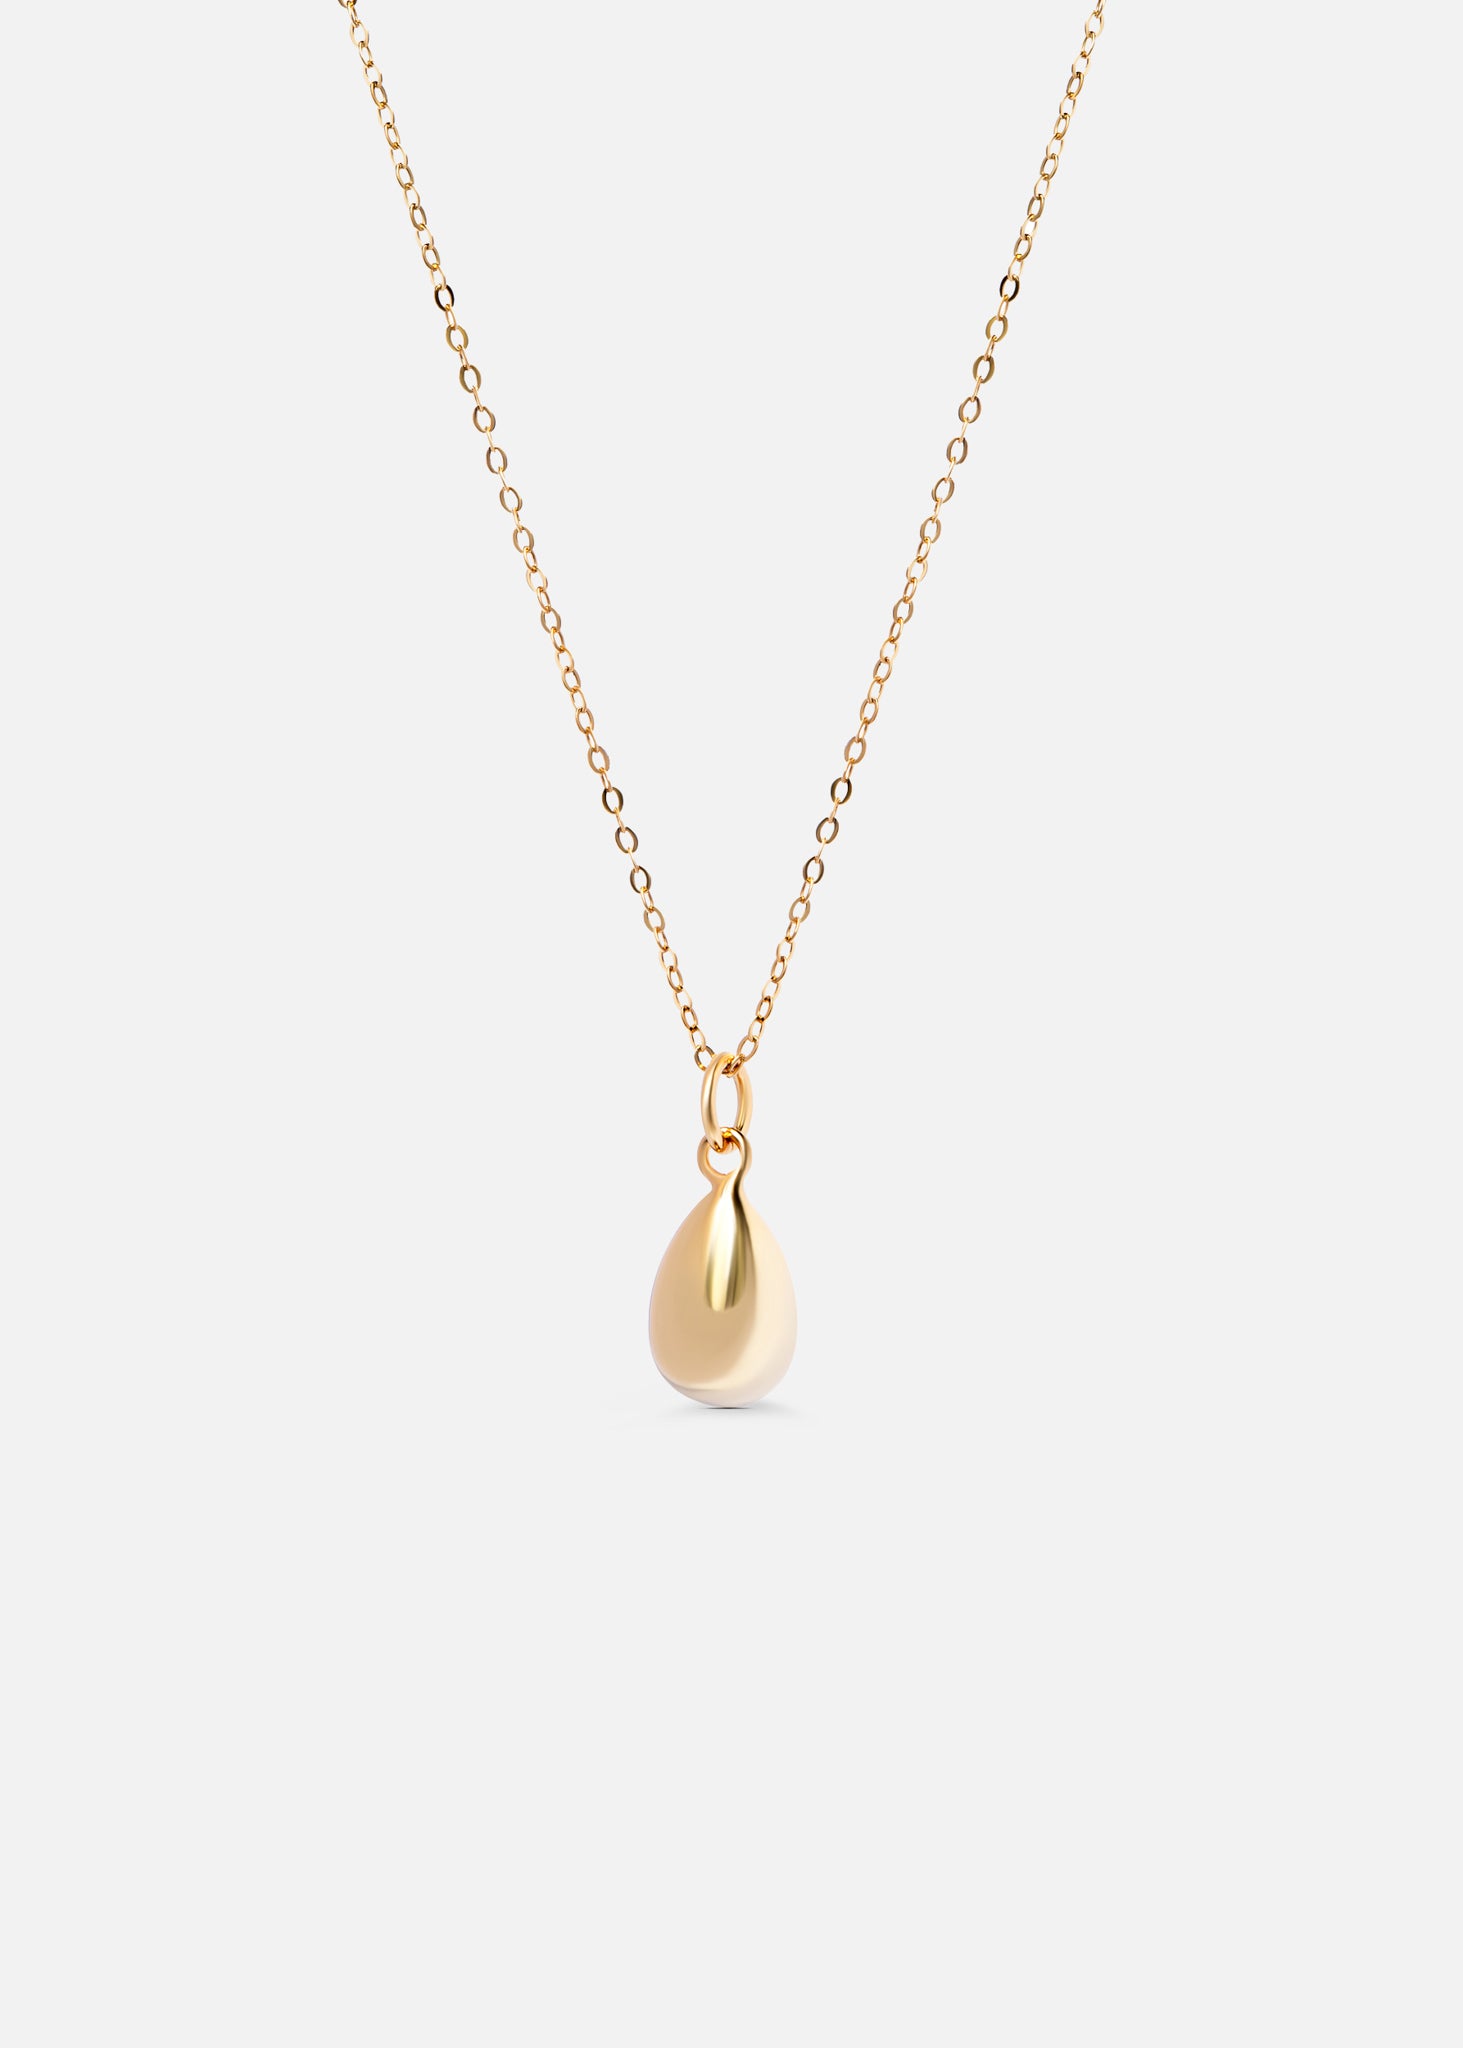 Gold drop necklace